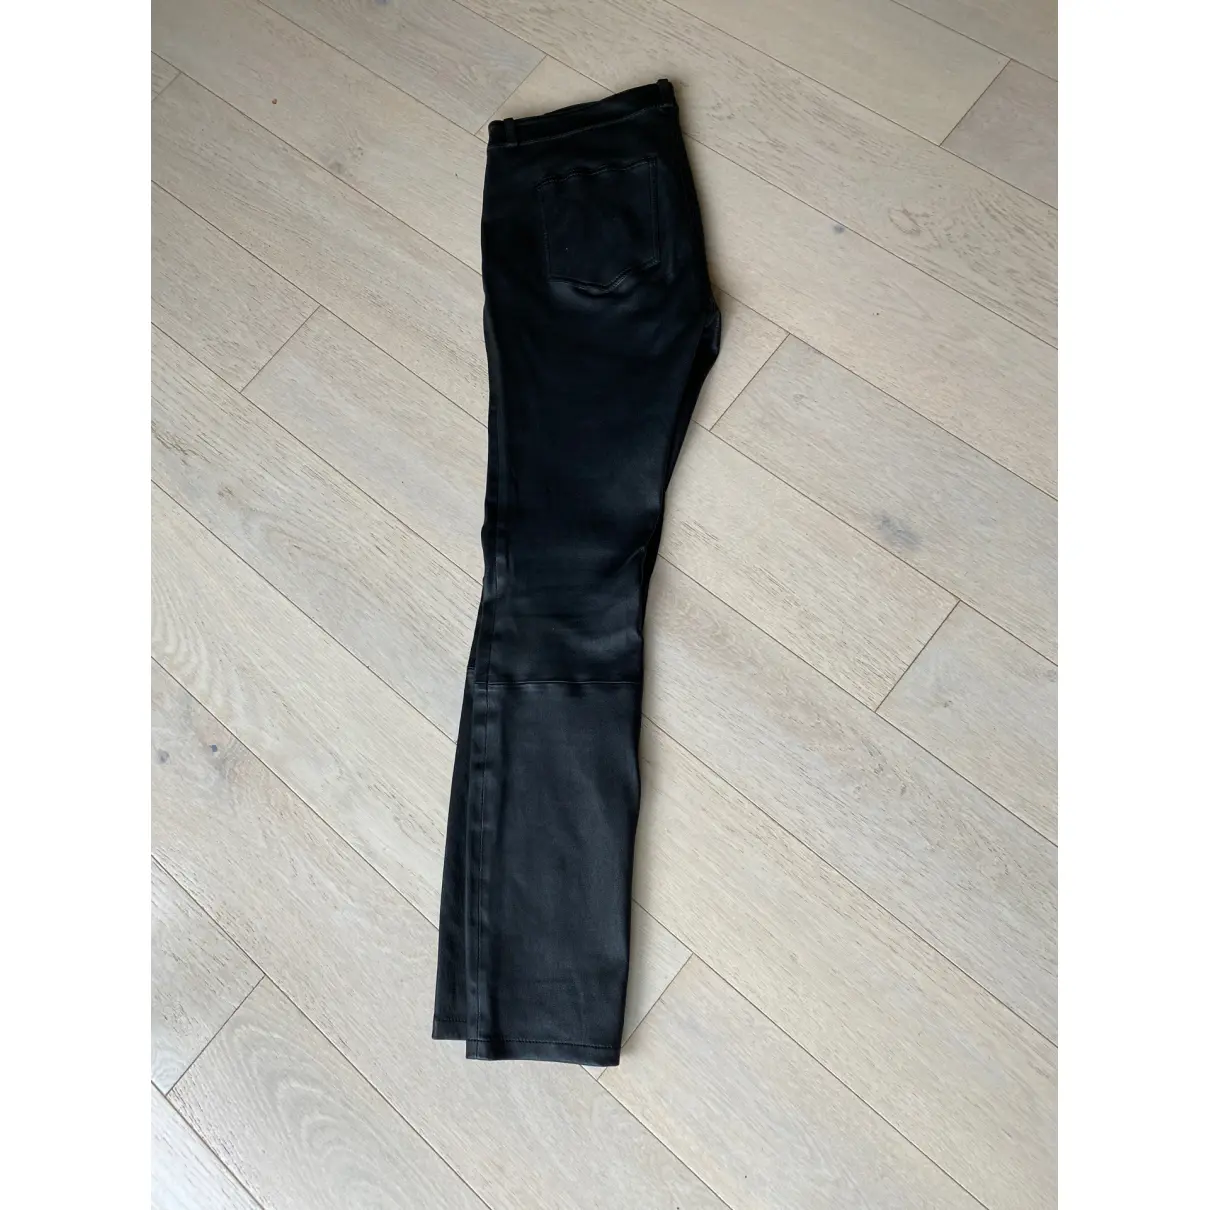 Buy Zapa Leather straight pants online